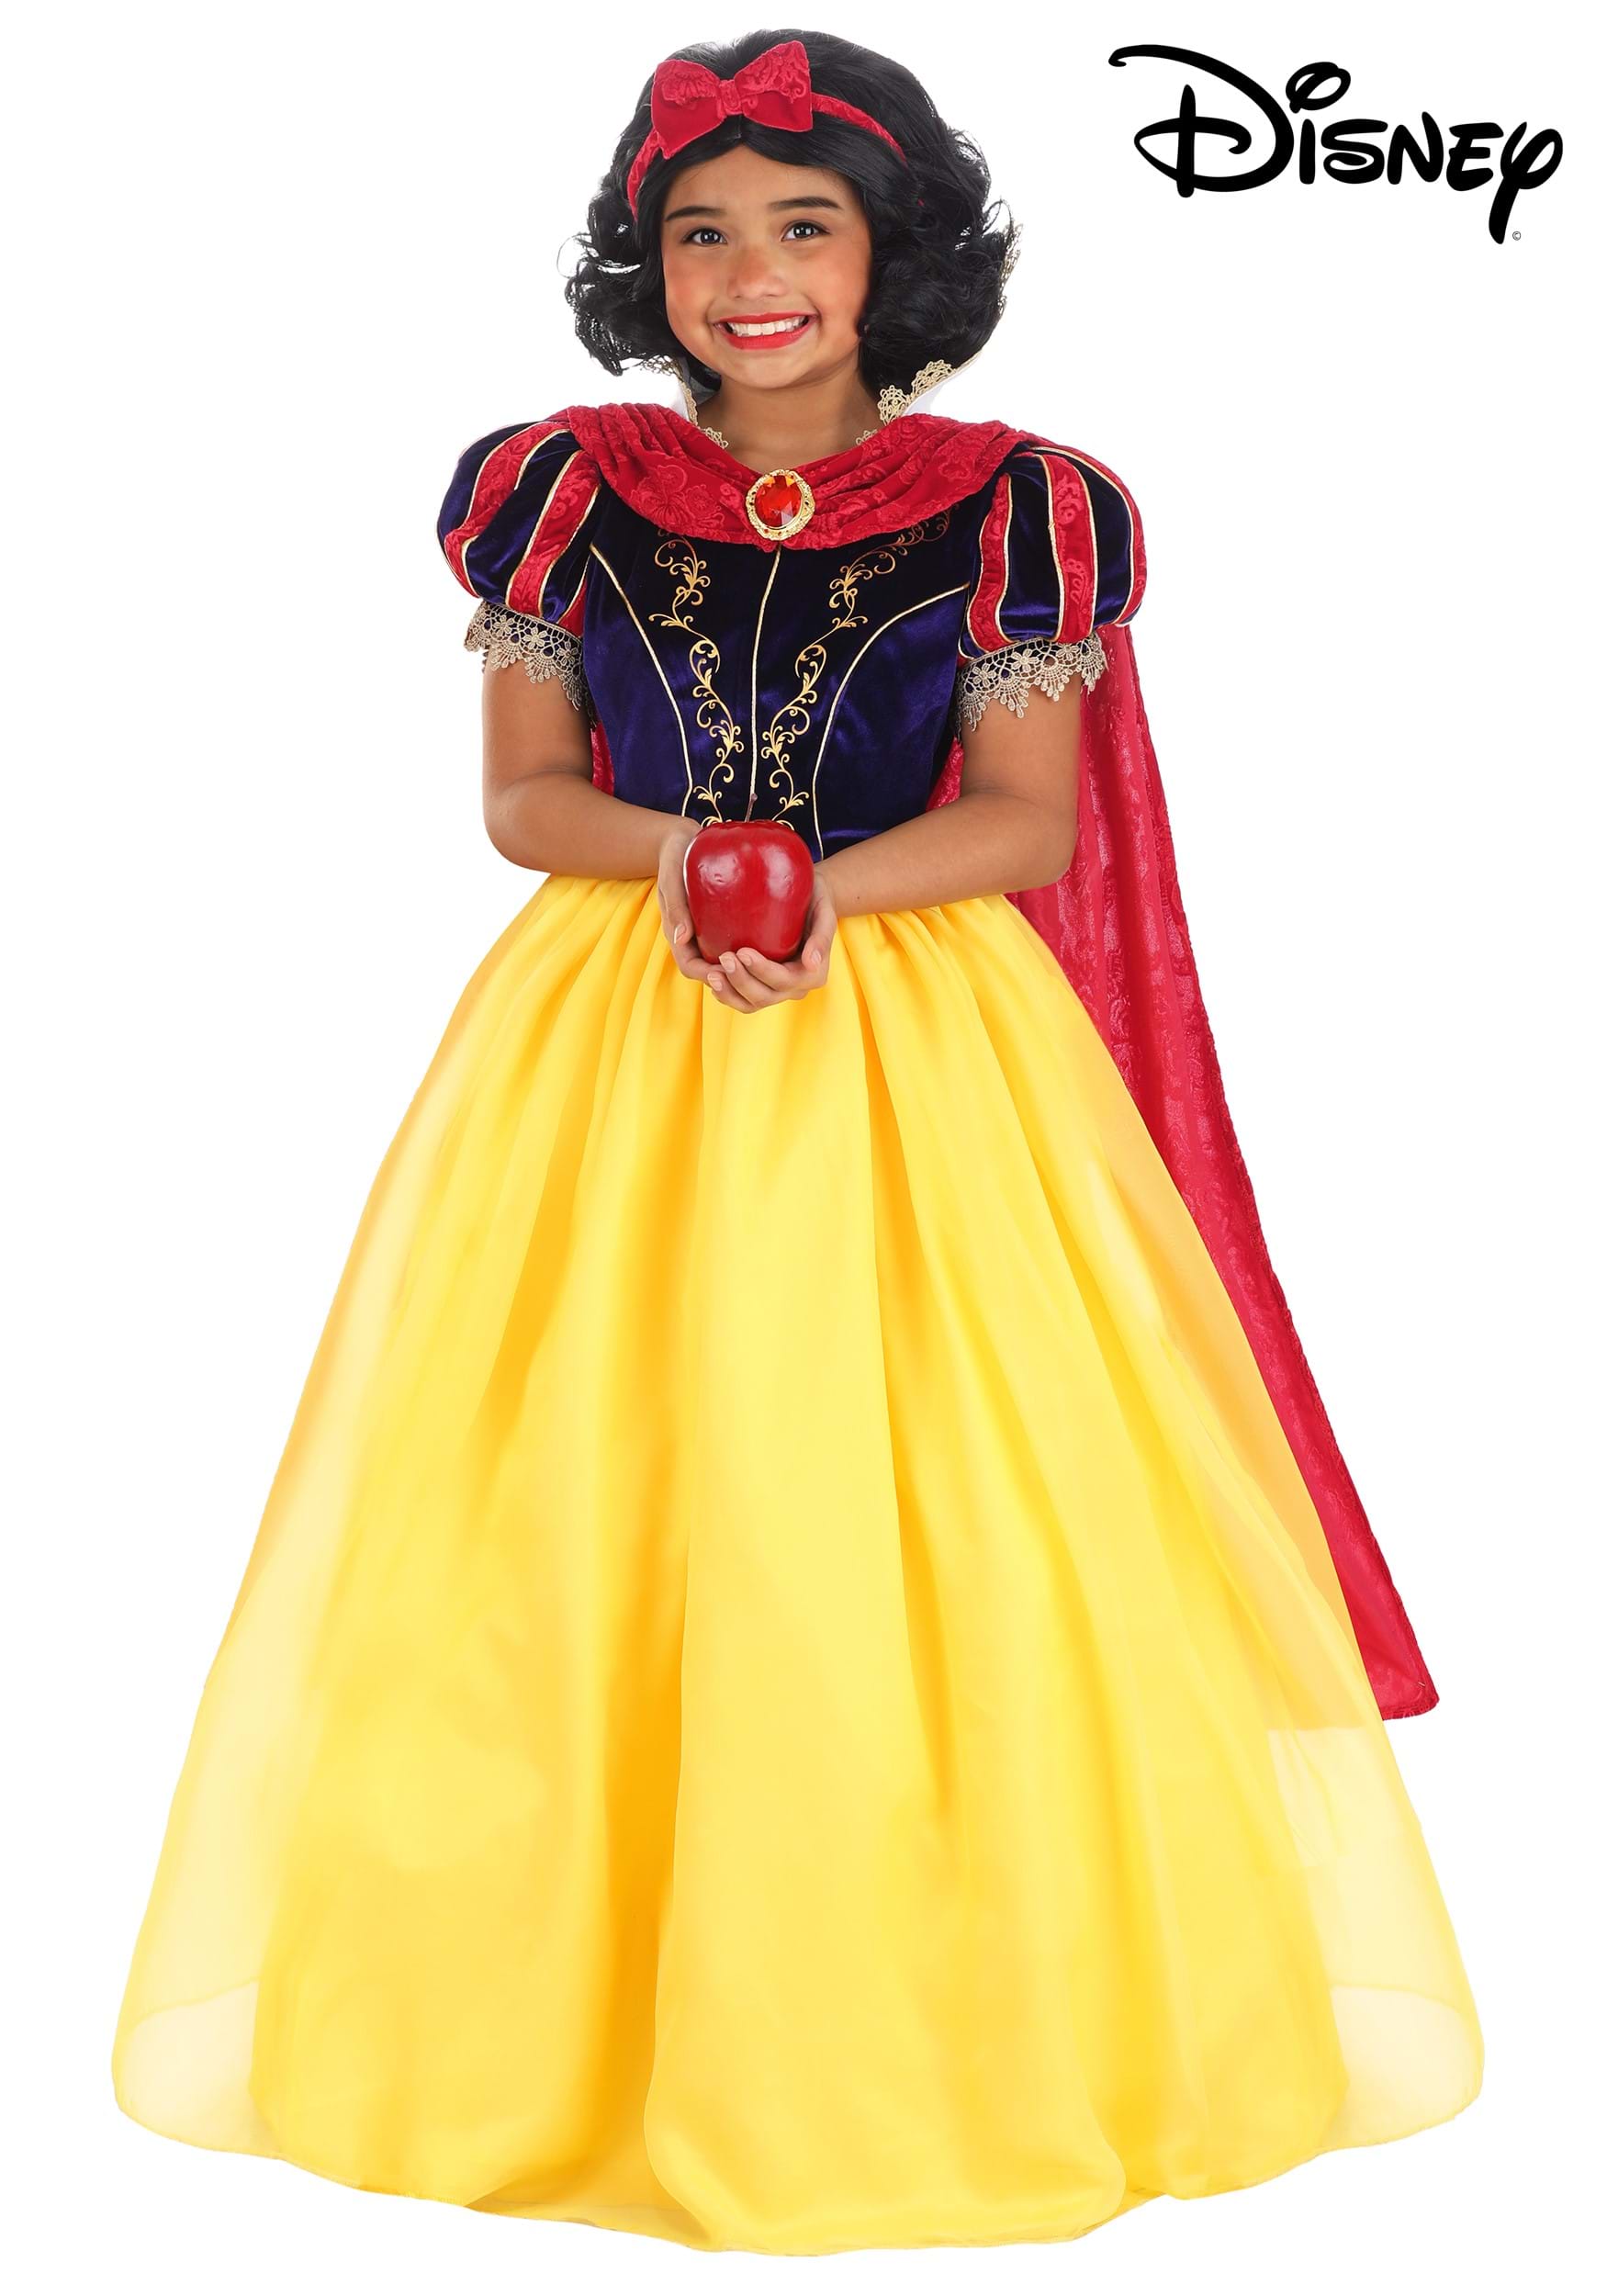 Snow White Costume | Snow White Costume Online Store | Big Discount